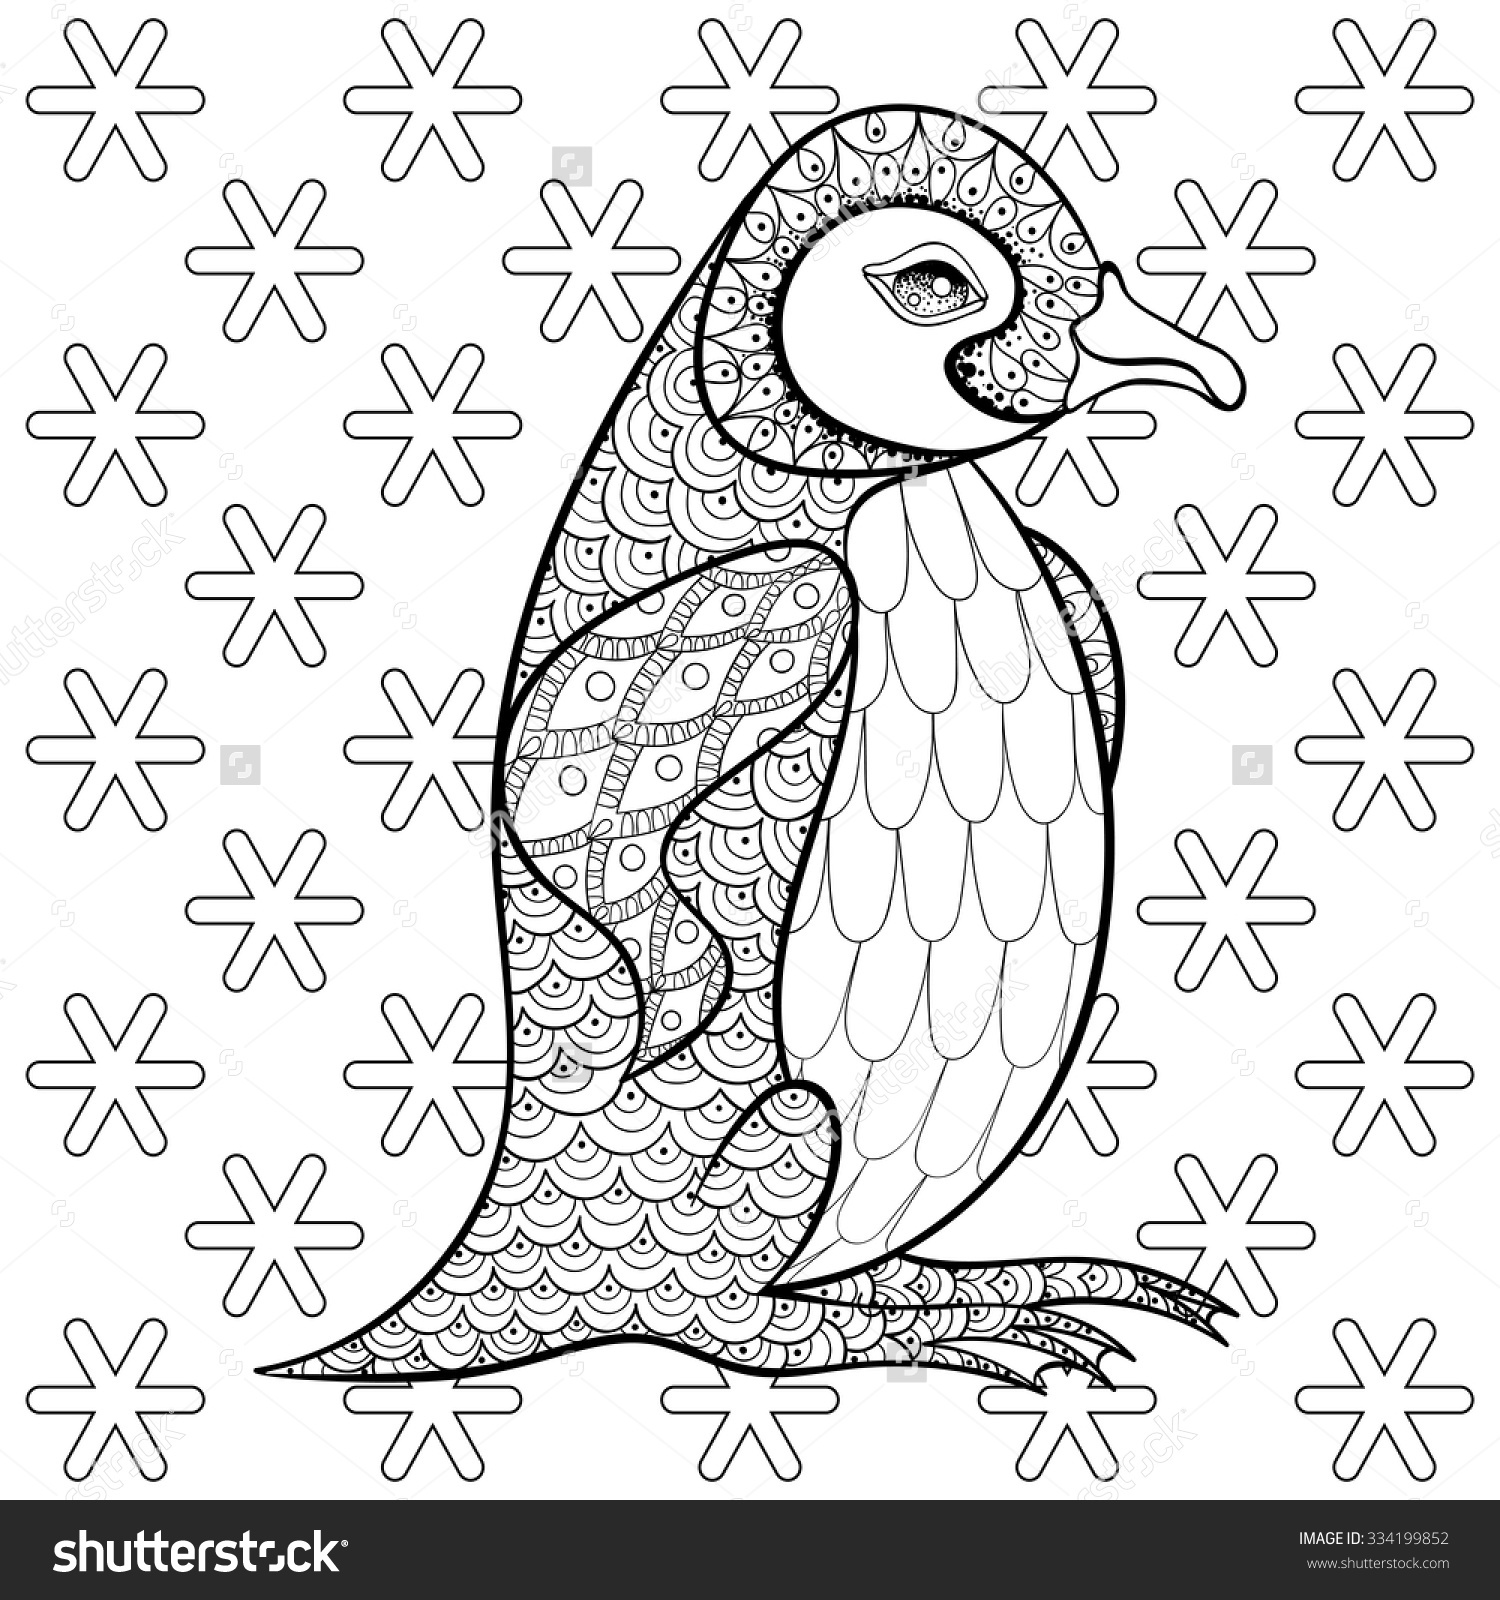 King Penguin coloring #2, Download drawings